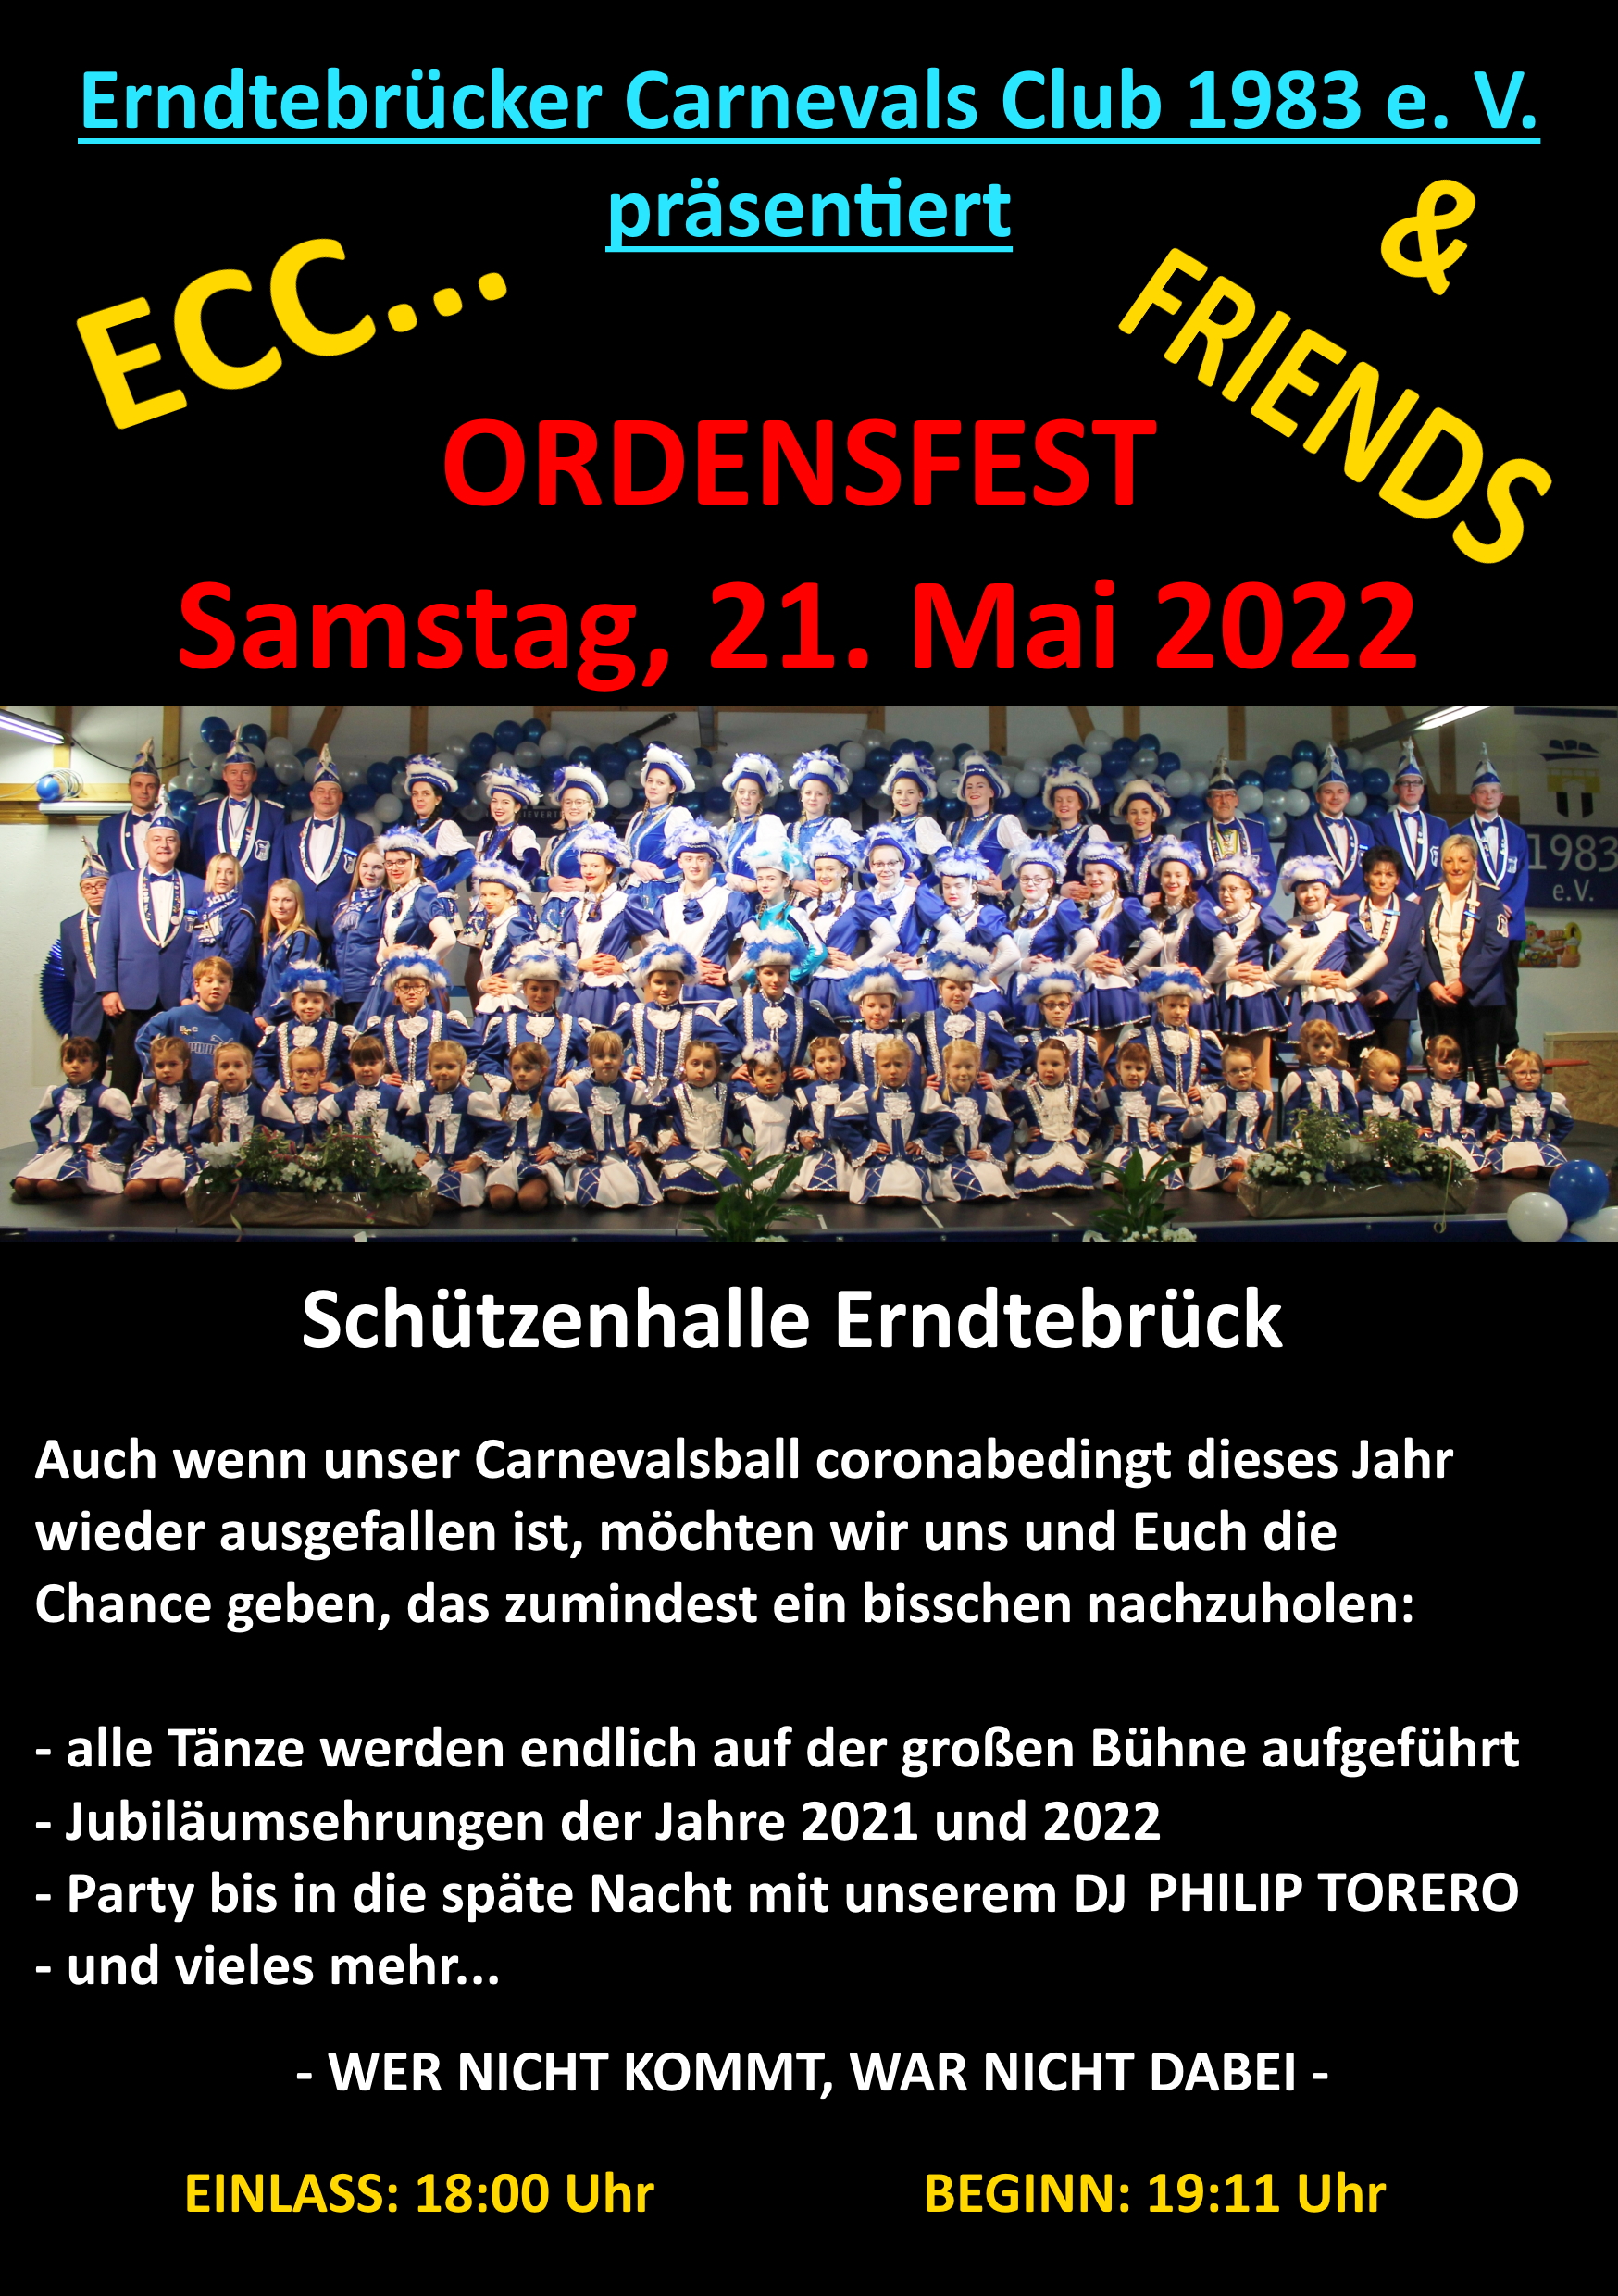 ECC Ordensfest 21.05.2022 - Ticketbestellung 